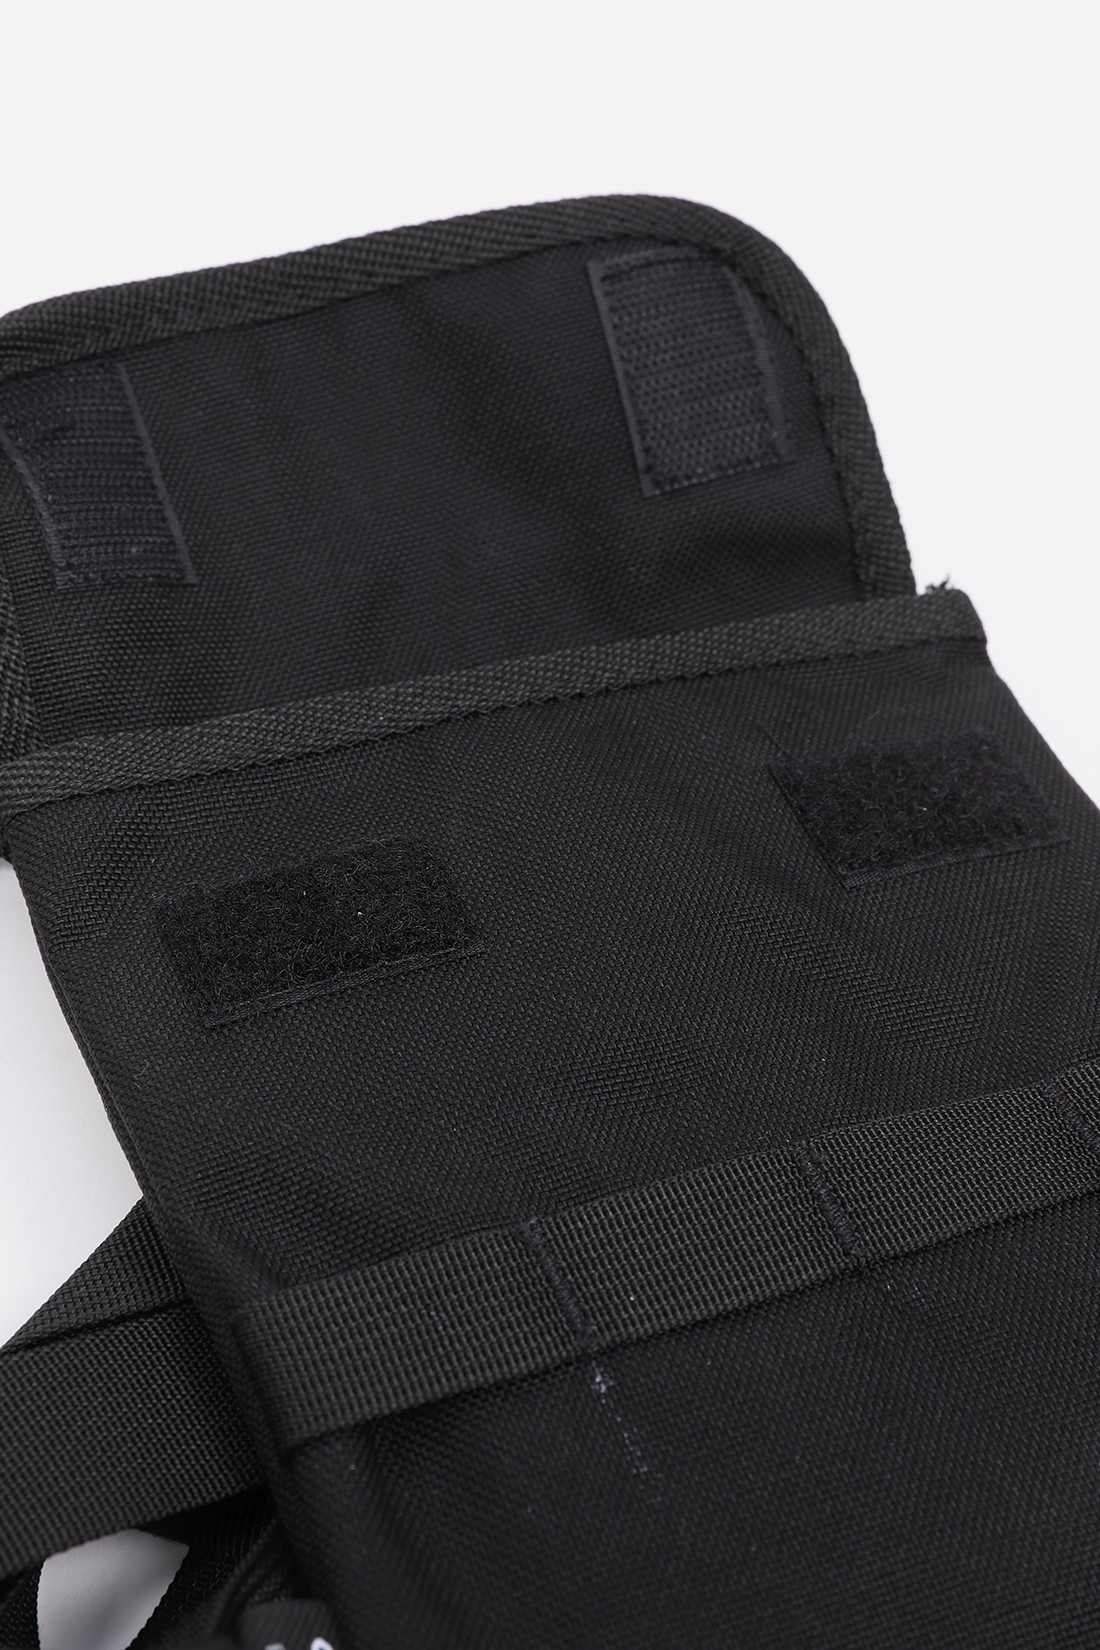 BATTENWEAR / Travel pouch v.2 cordura nylon Black